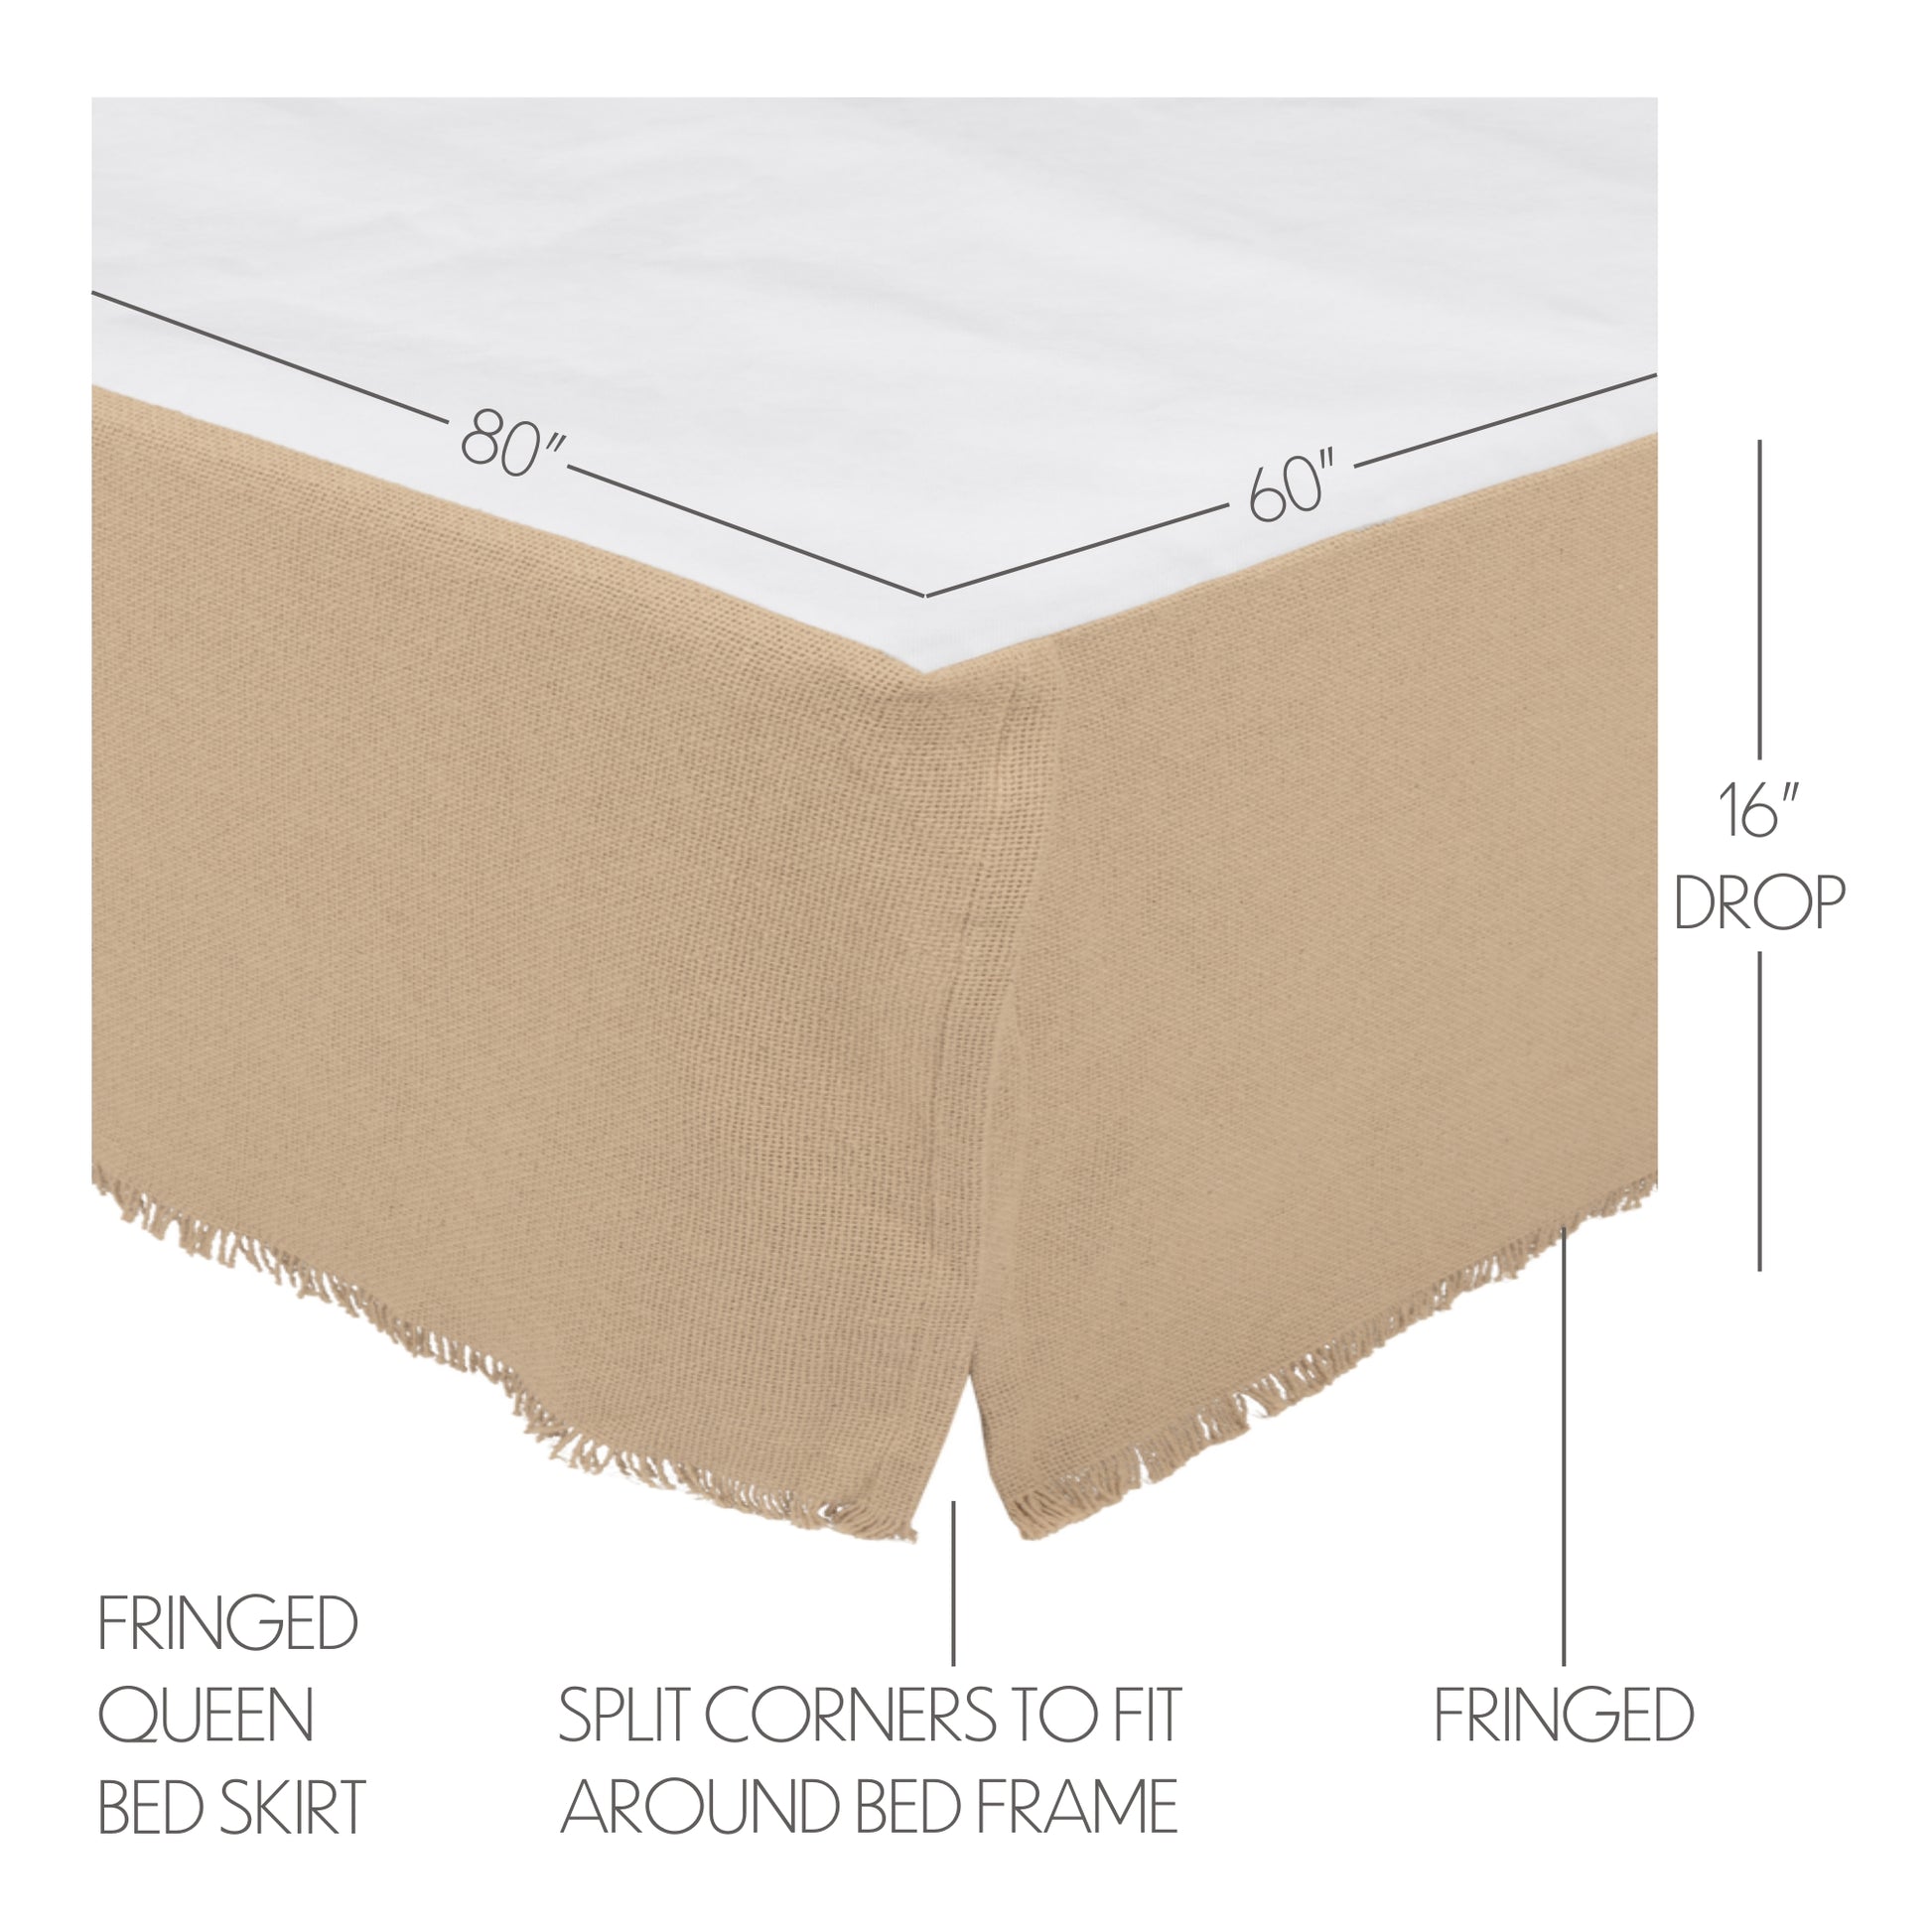 45640-Burlap-Vintage-Fringed-Queen-Bed-Skirt-60x80x16-image-2